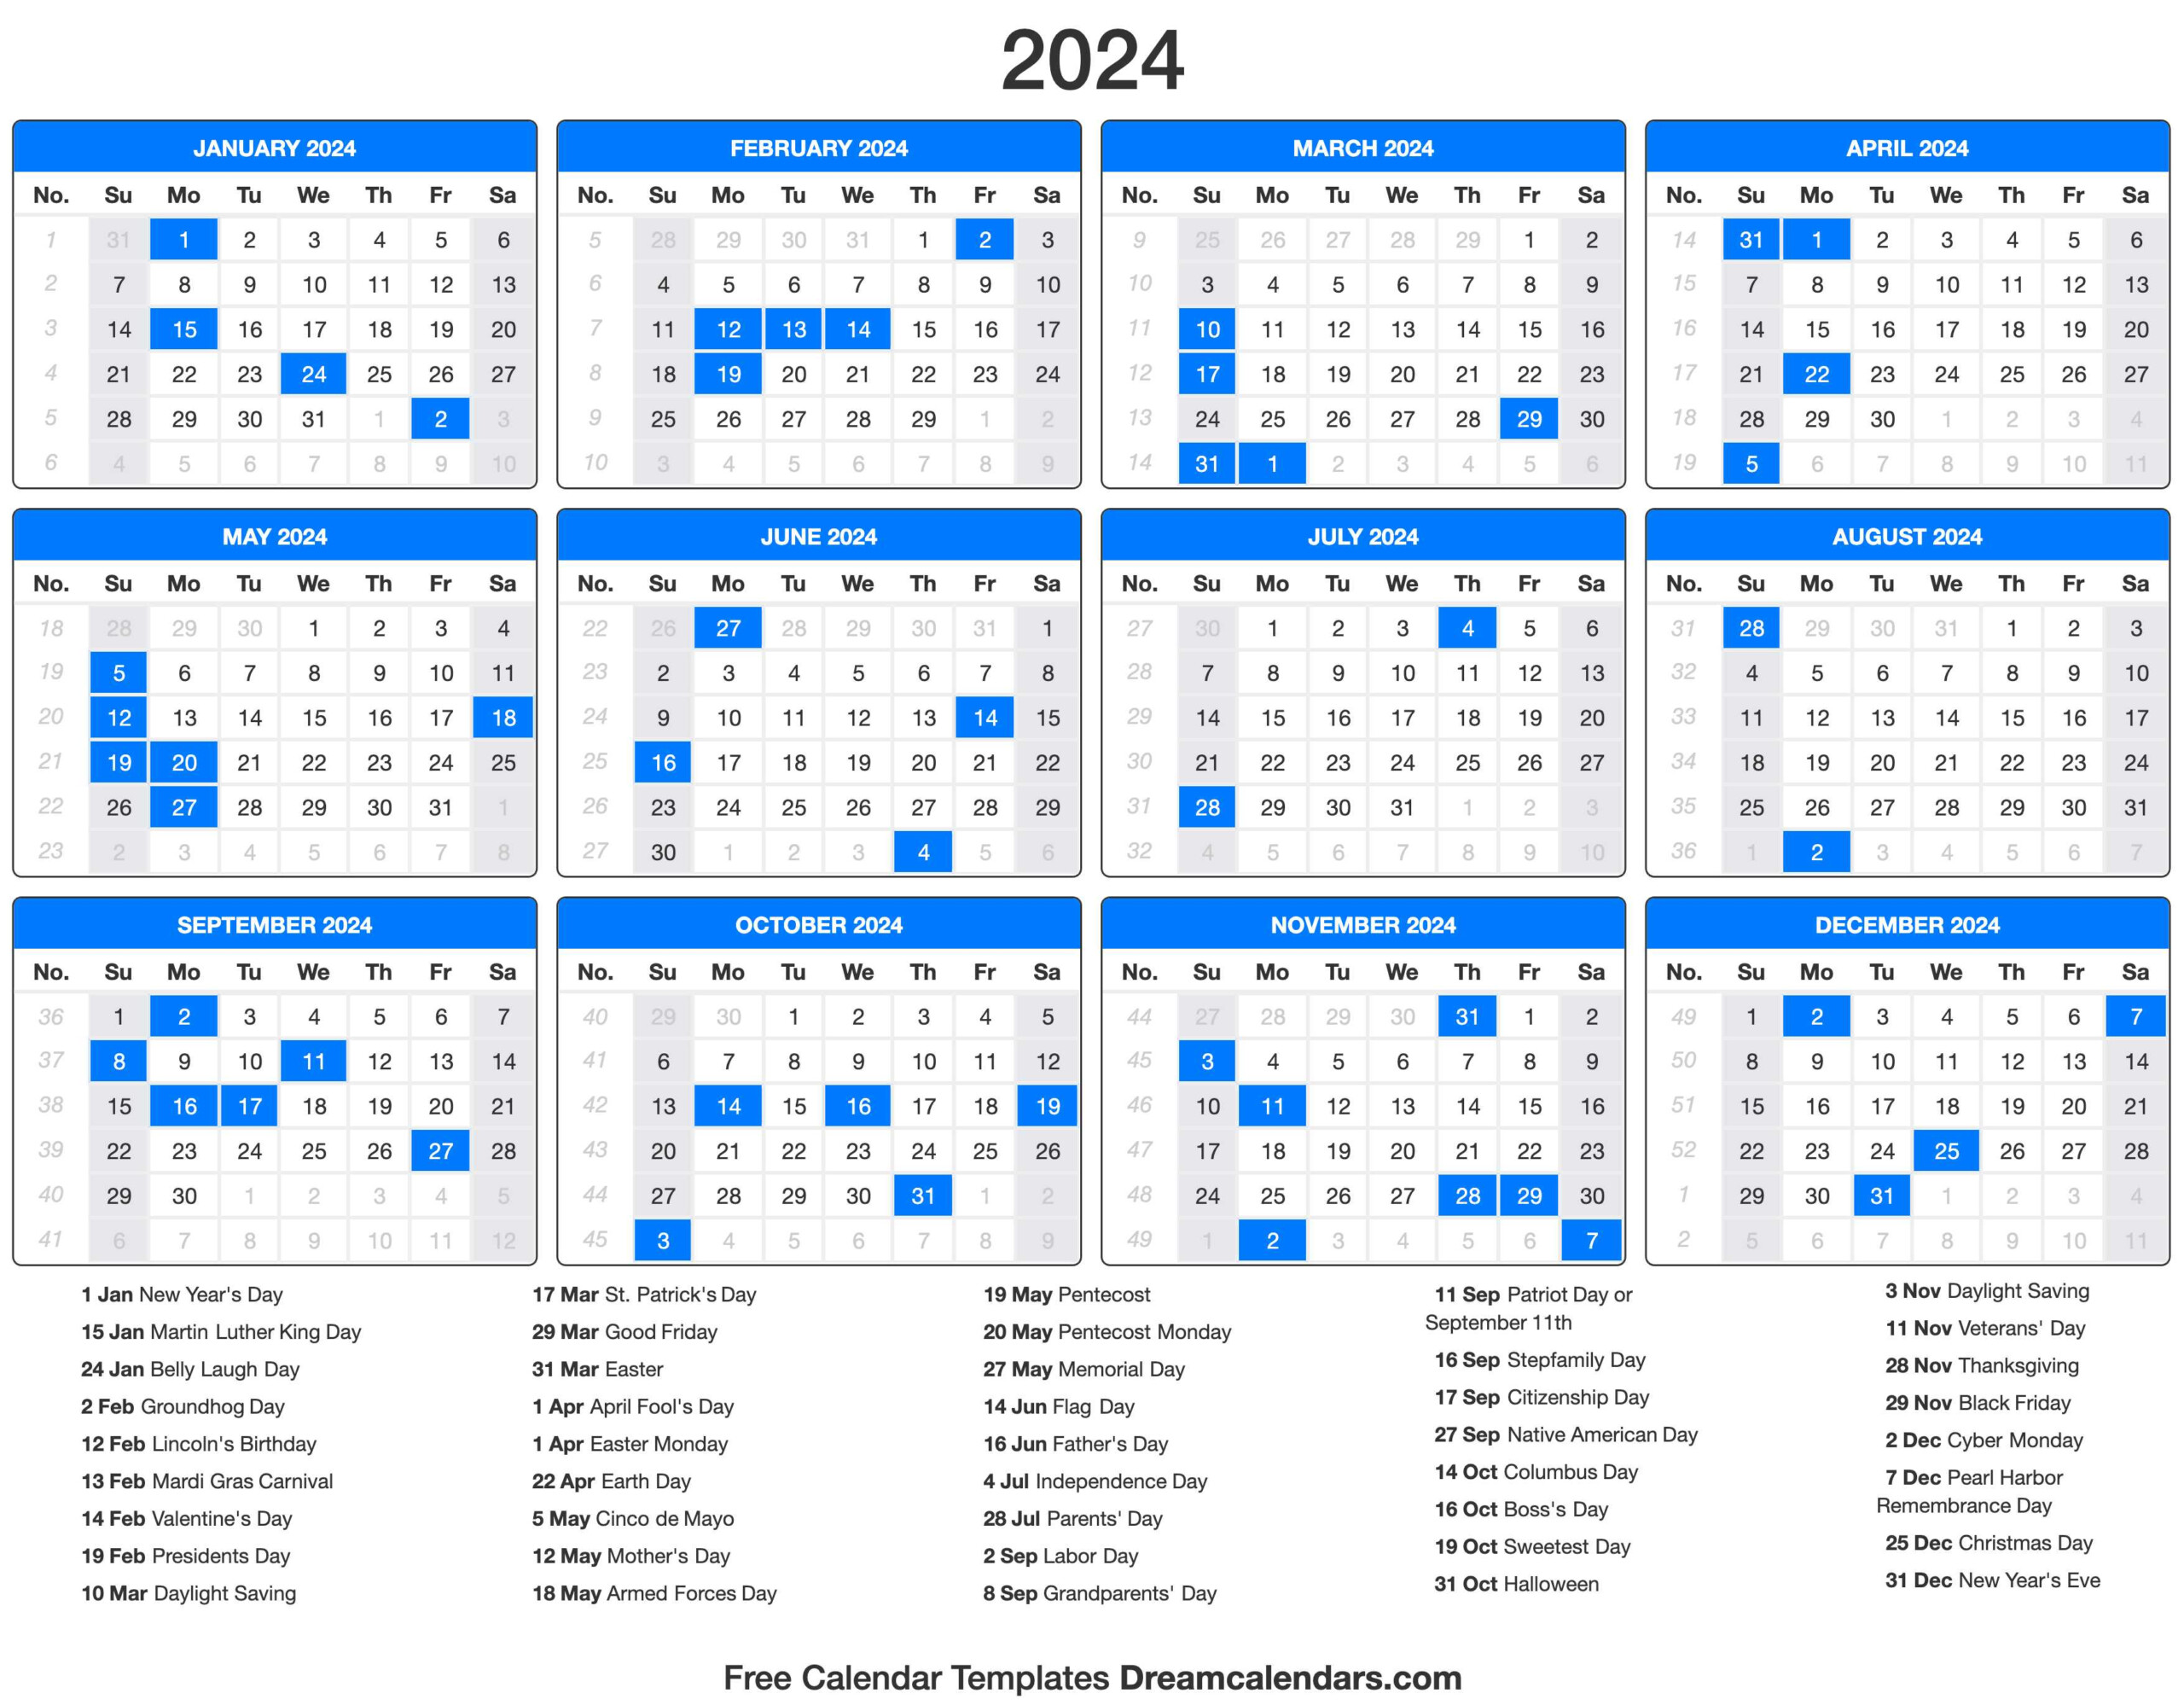 2024 calendars nycdesignco printable things free printable calendar